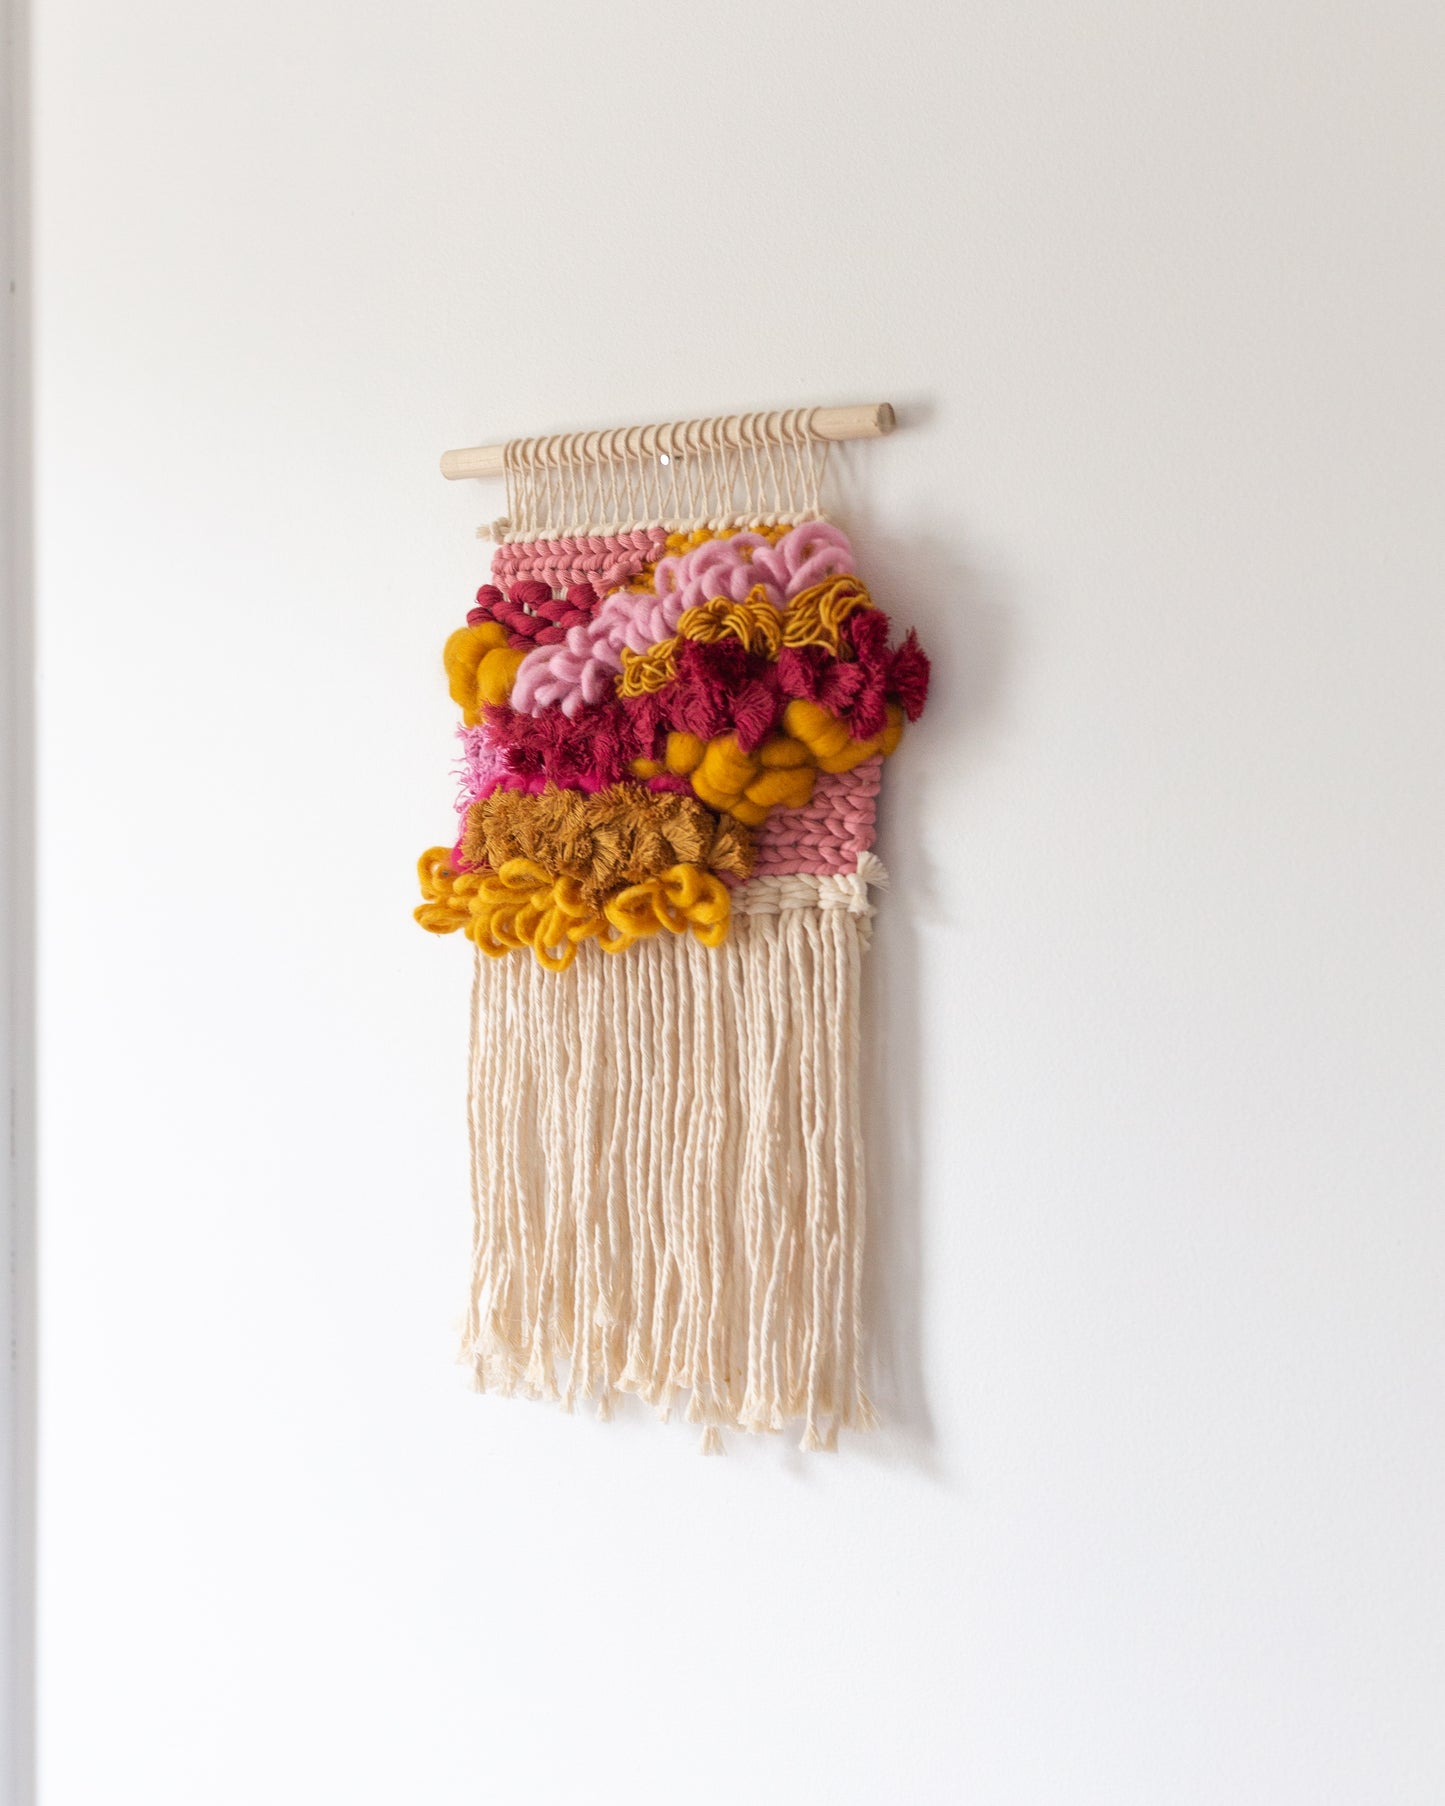 Weaving #6 | Woven Wall Hanging